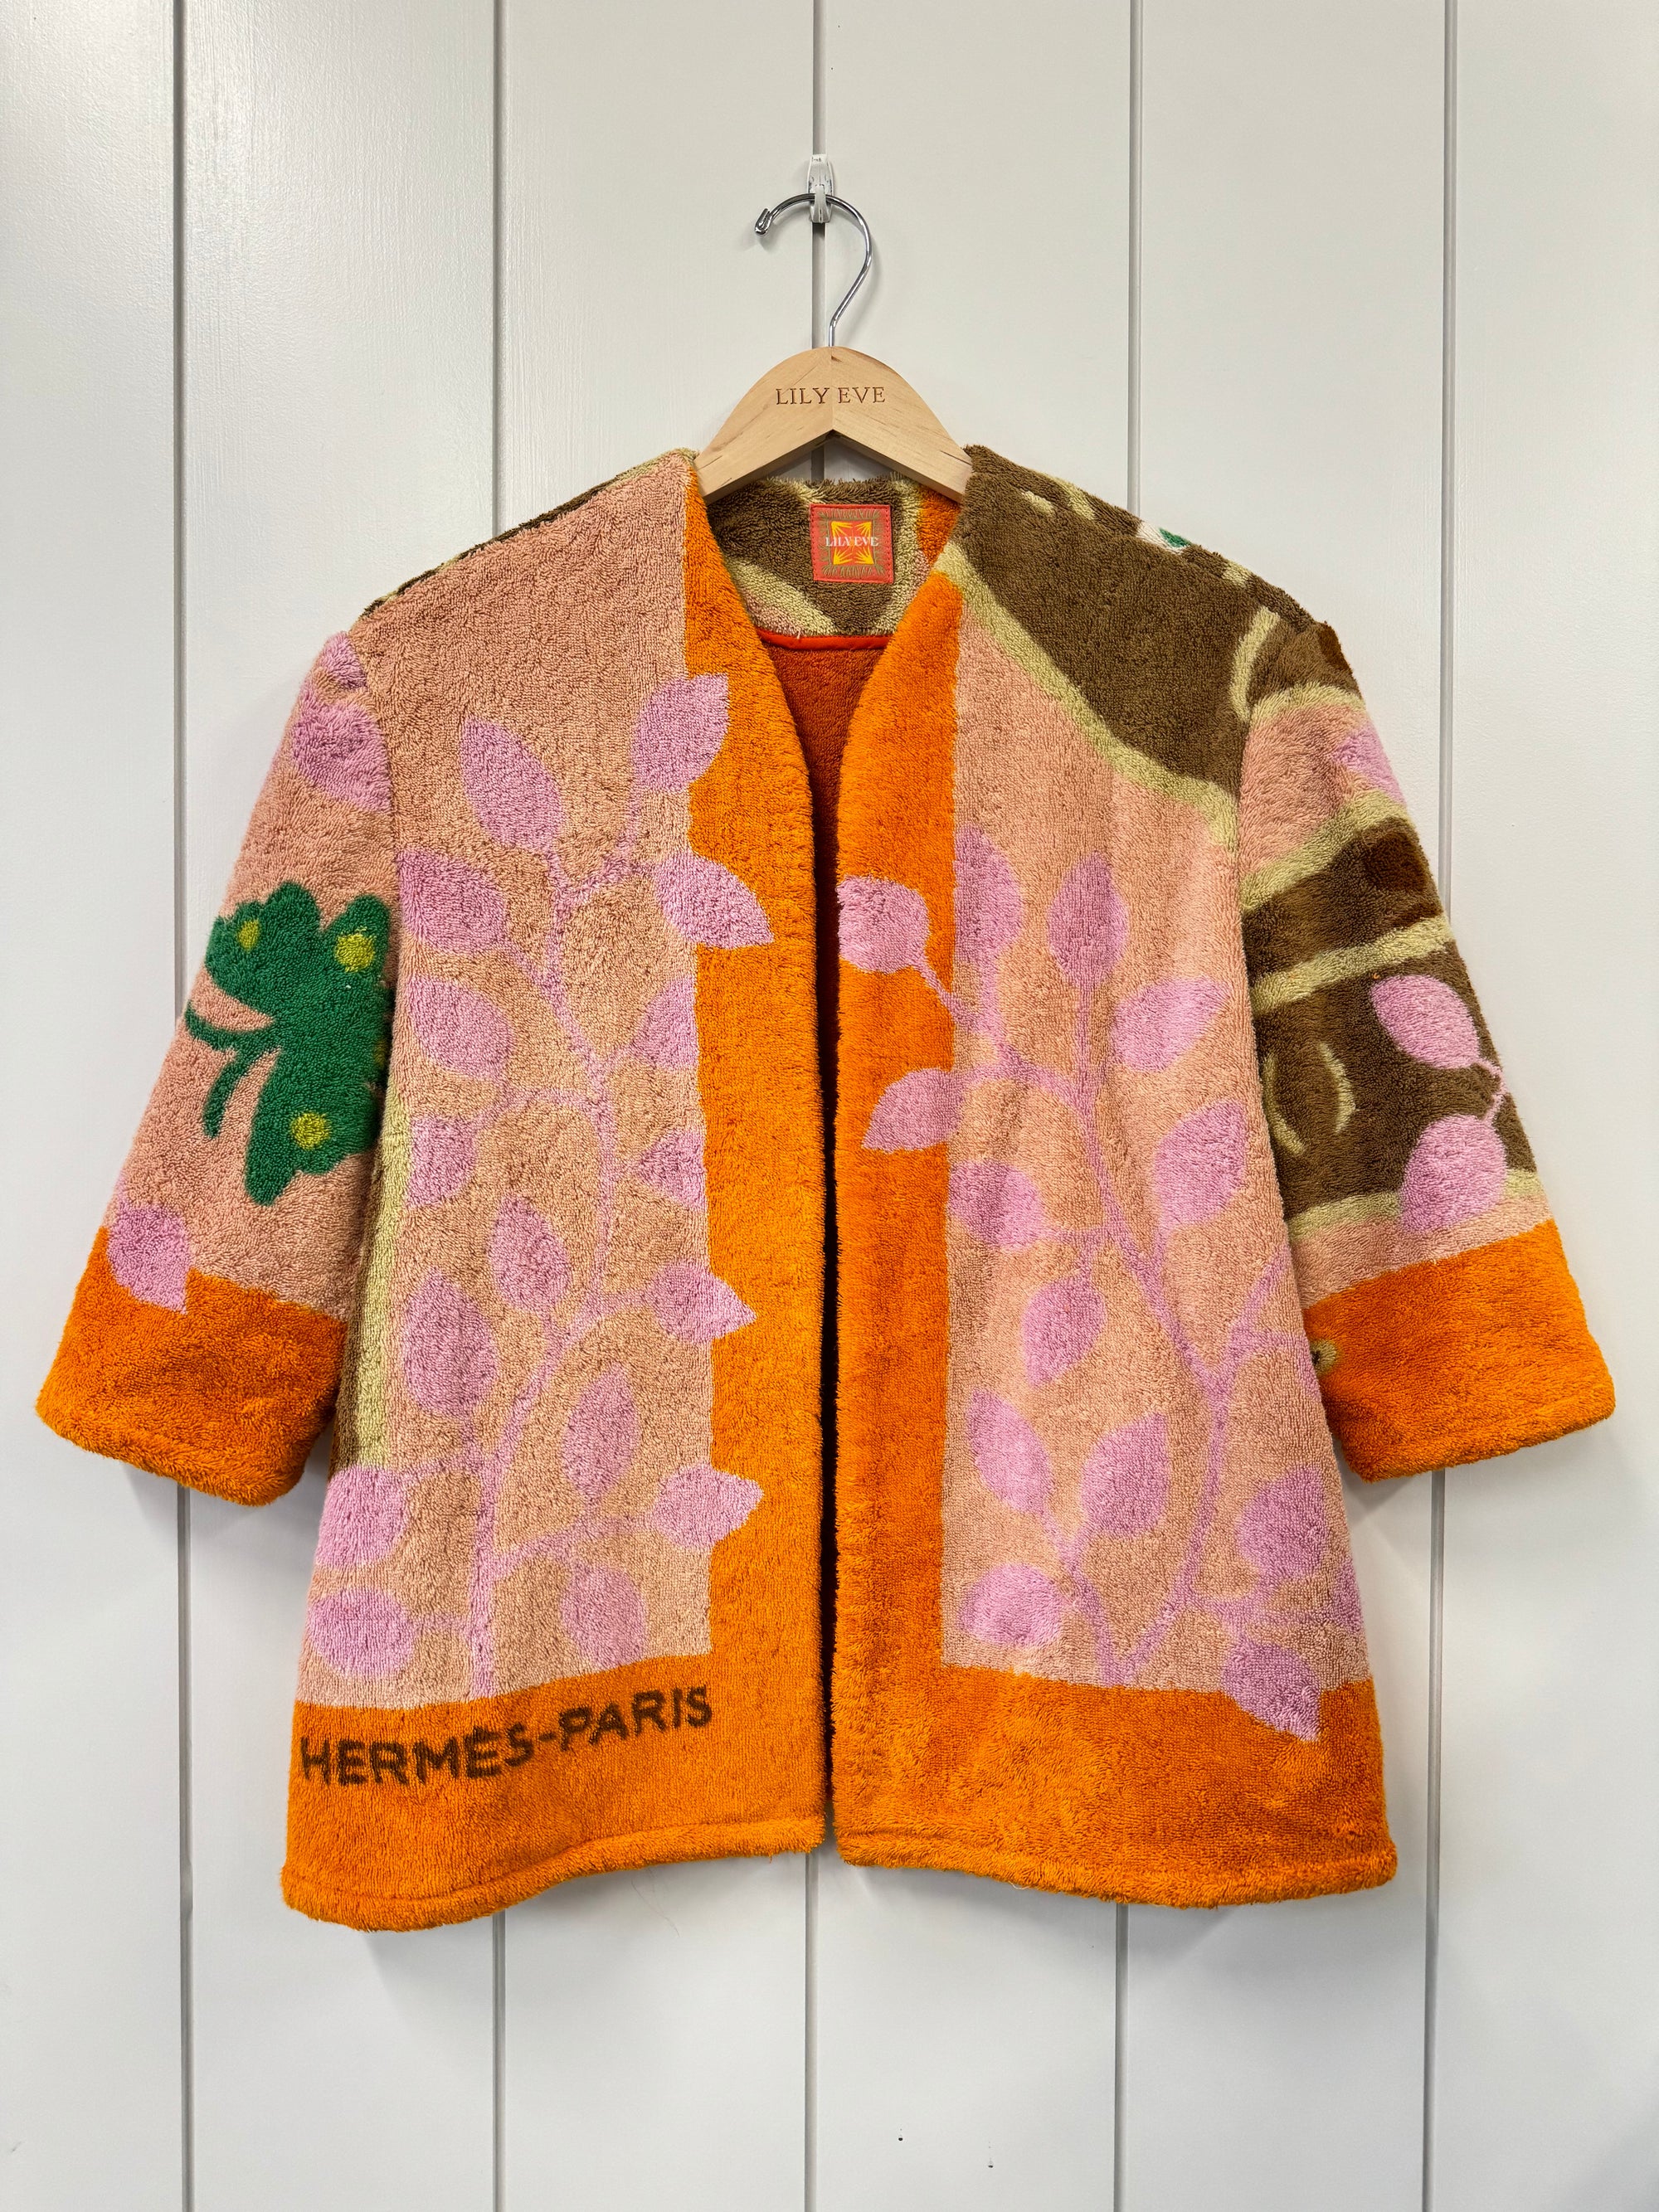 The Pink Elephant Jacket